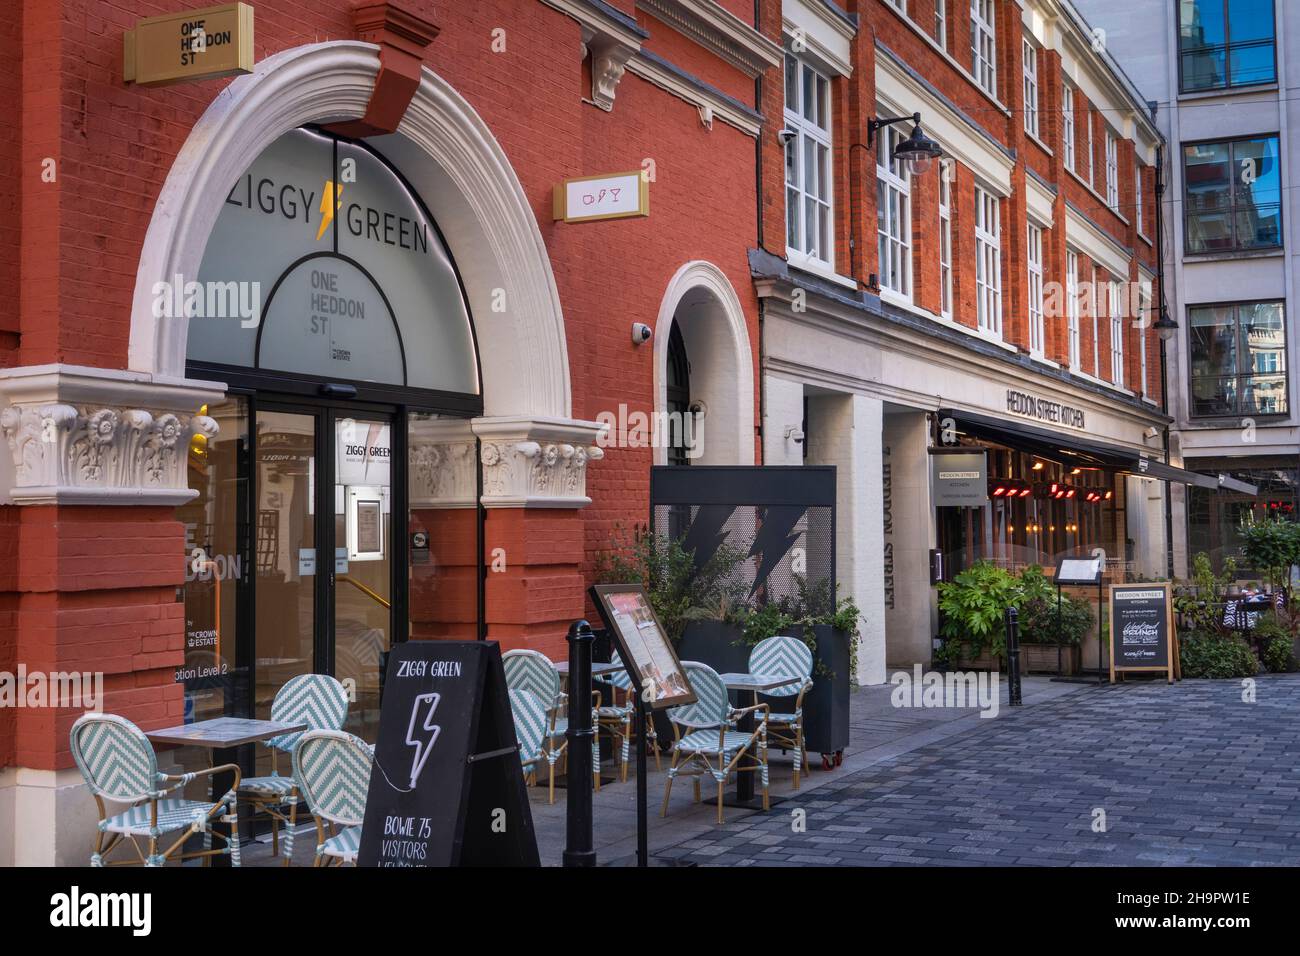 UK, England, London, Heddon Street, Ziggy Green and Gordon Ramsay restaurants at location of Ziggy Stardust album cover photograph Stock Photo